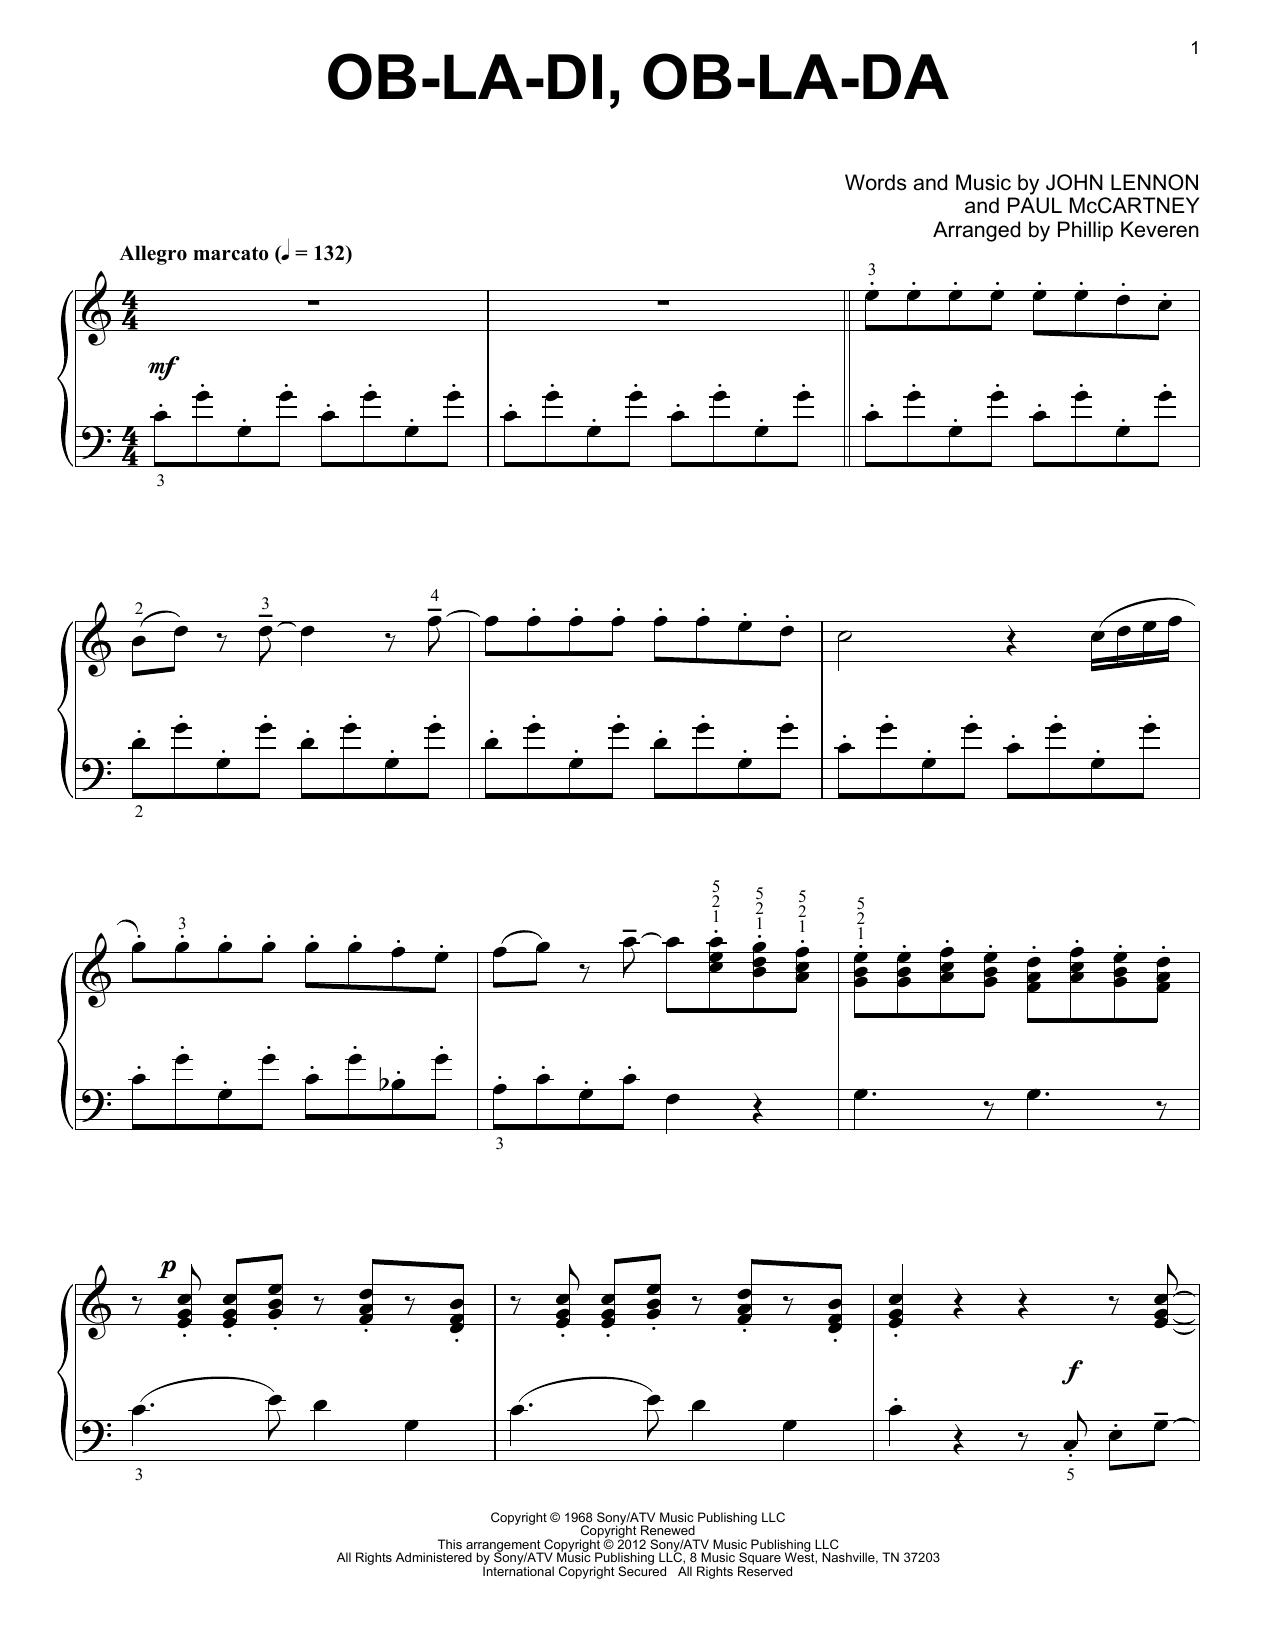 Download The Beatles Ob-La-Di, Ob-La-Da Sheet Music and learn how to play Piano PDF digital score in minutes